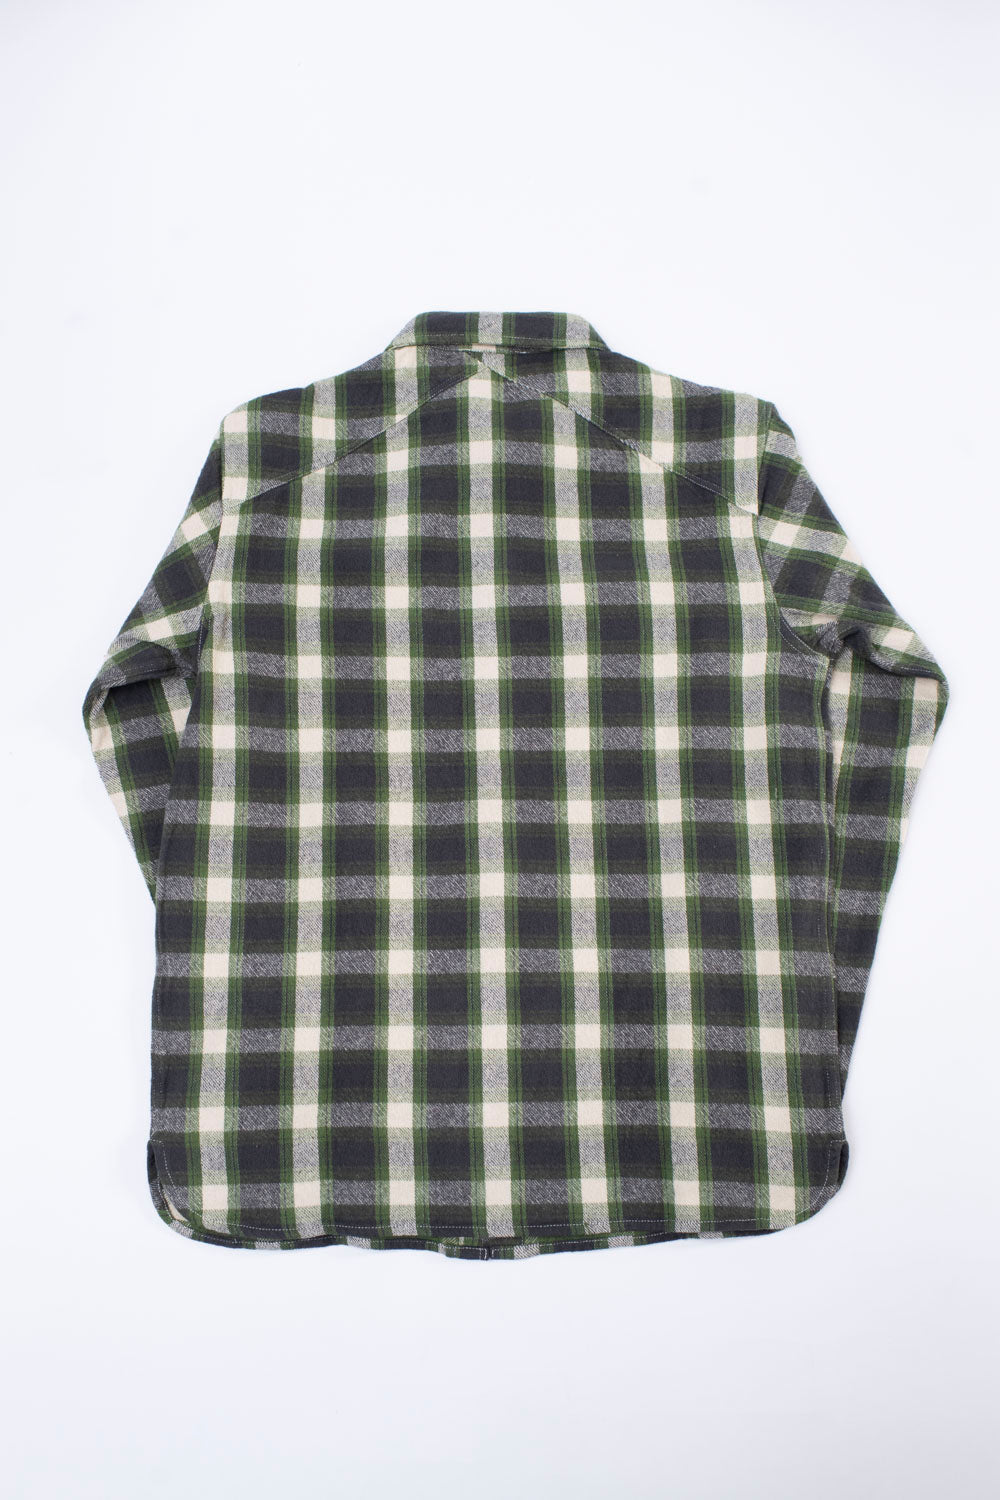 Crosscut Flannel - Emerald Shaggy Check